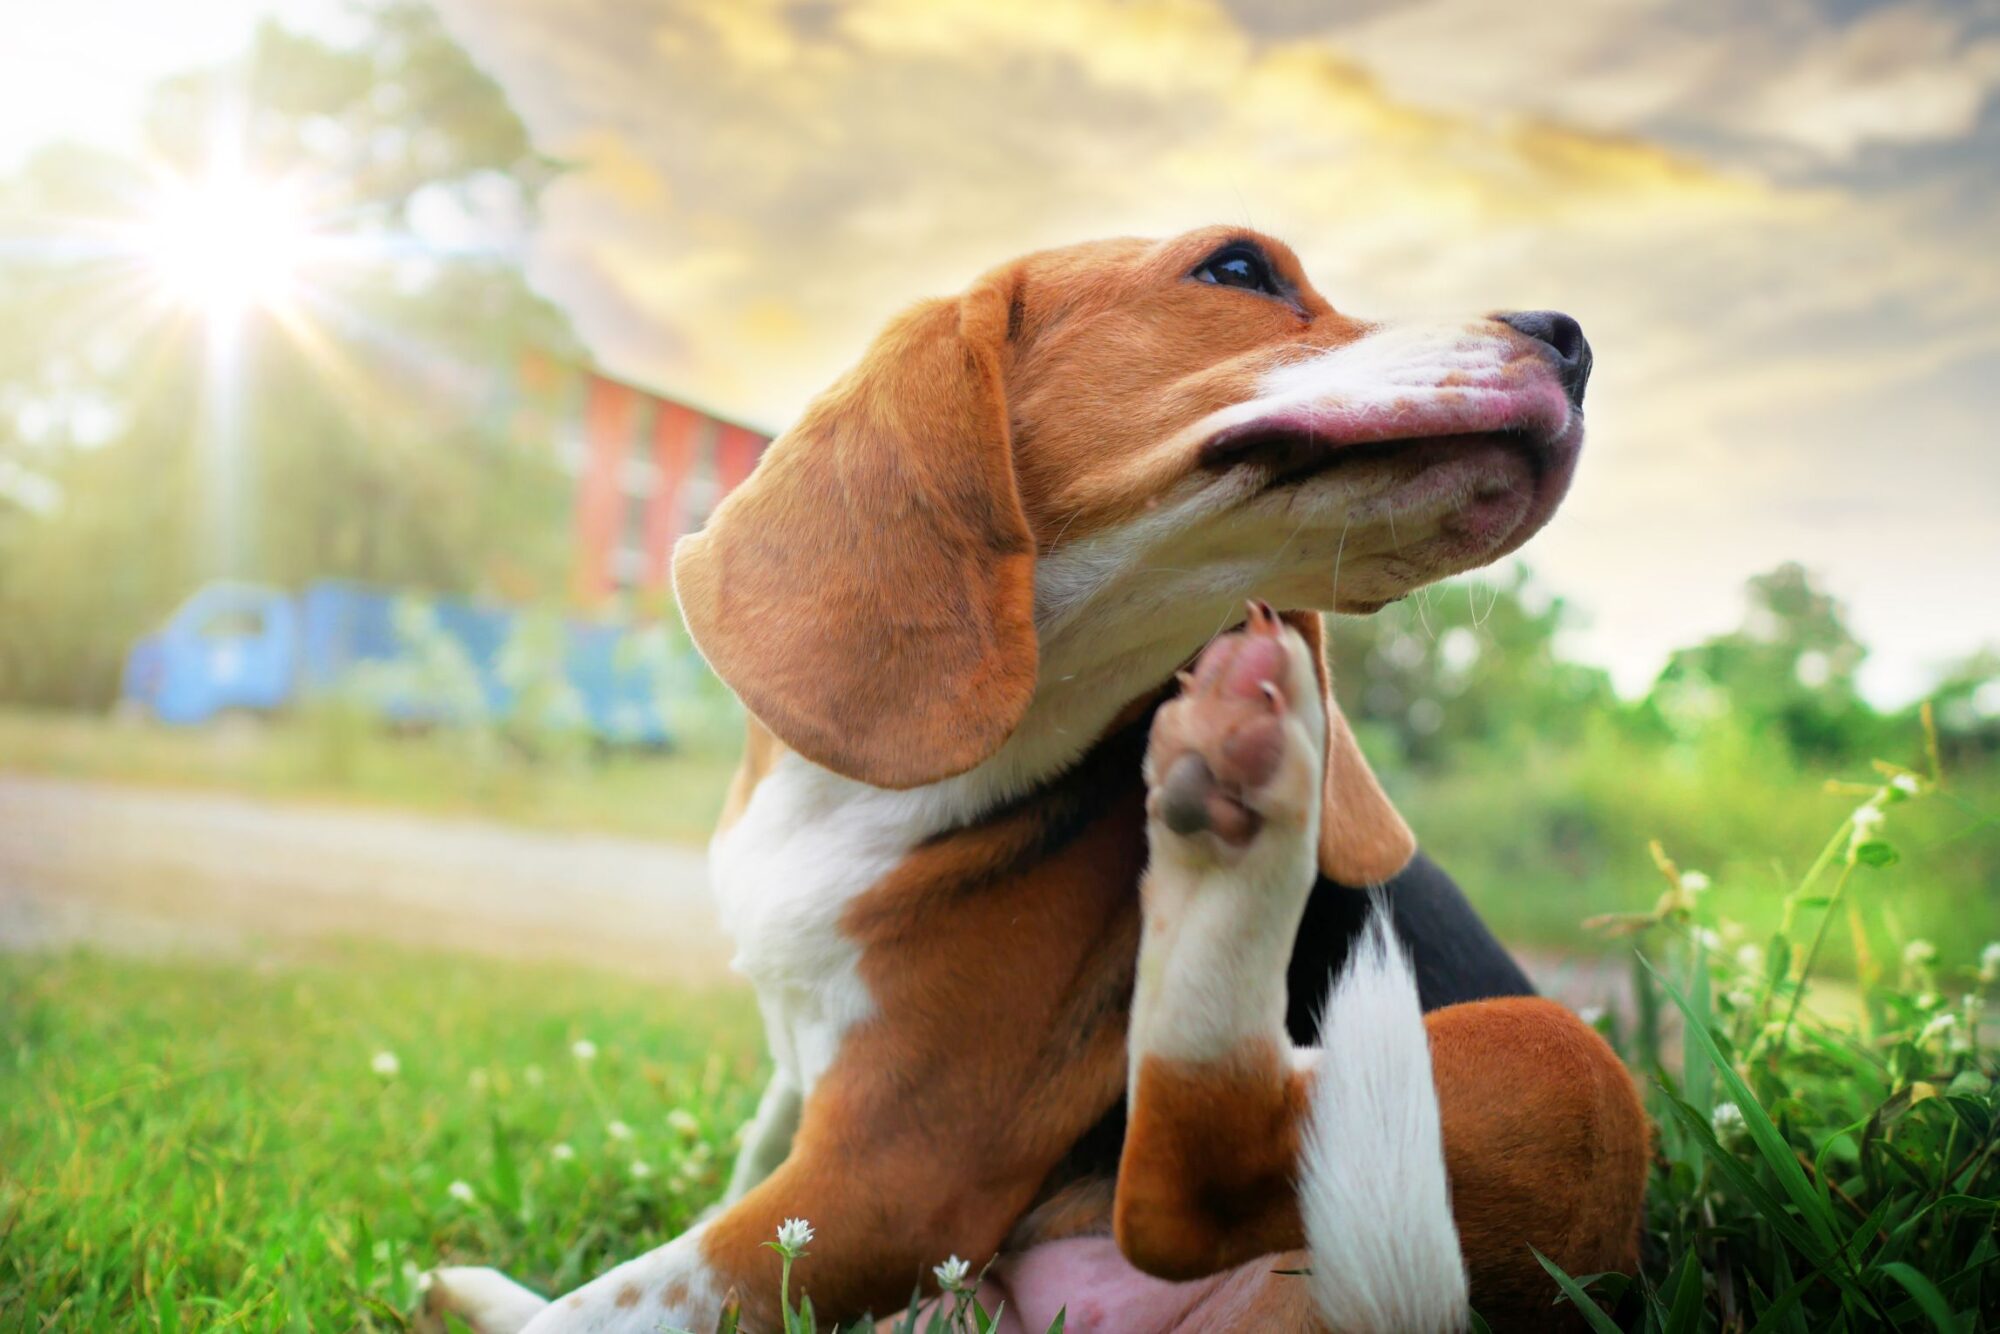 beagle dog scratching itself behind ear.